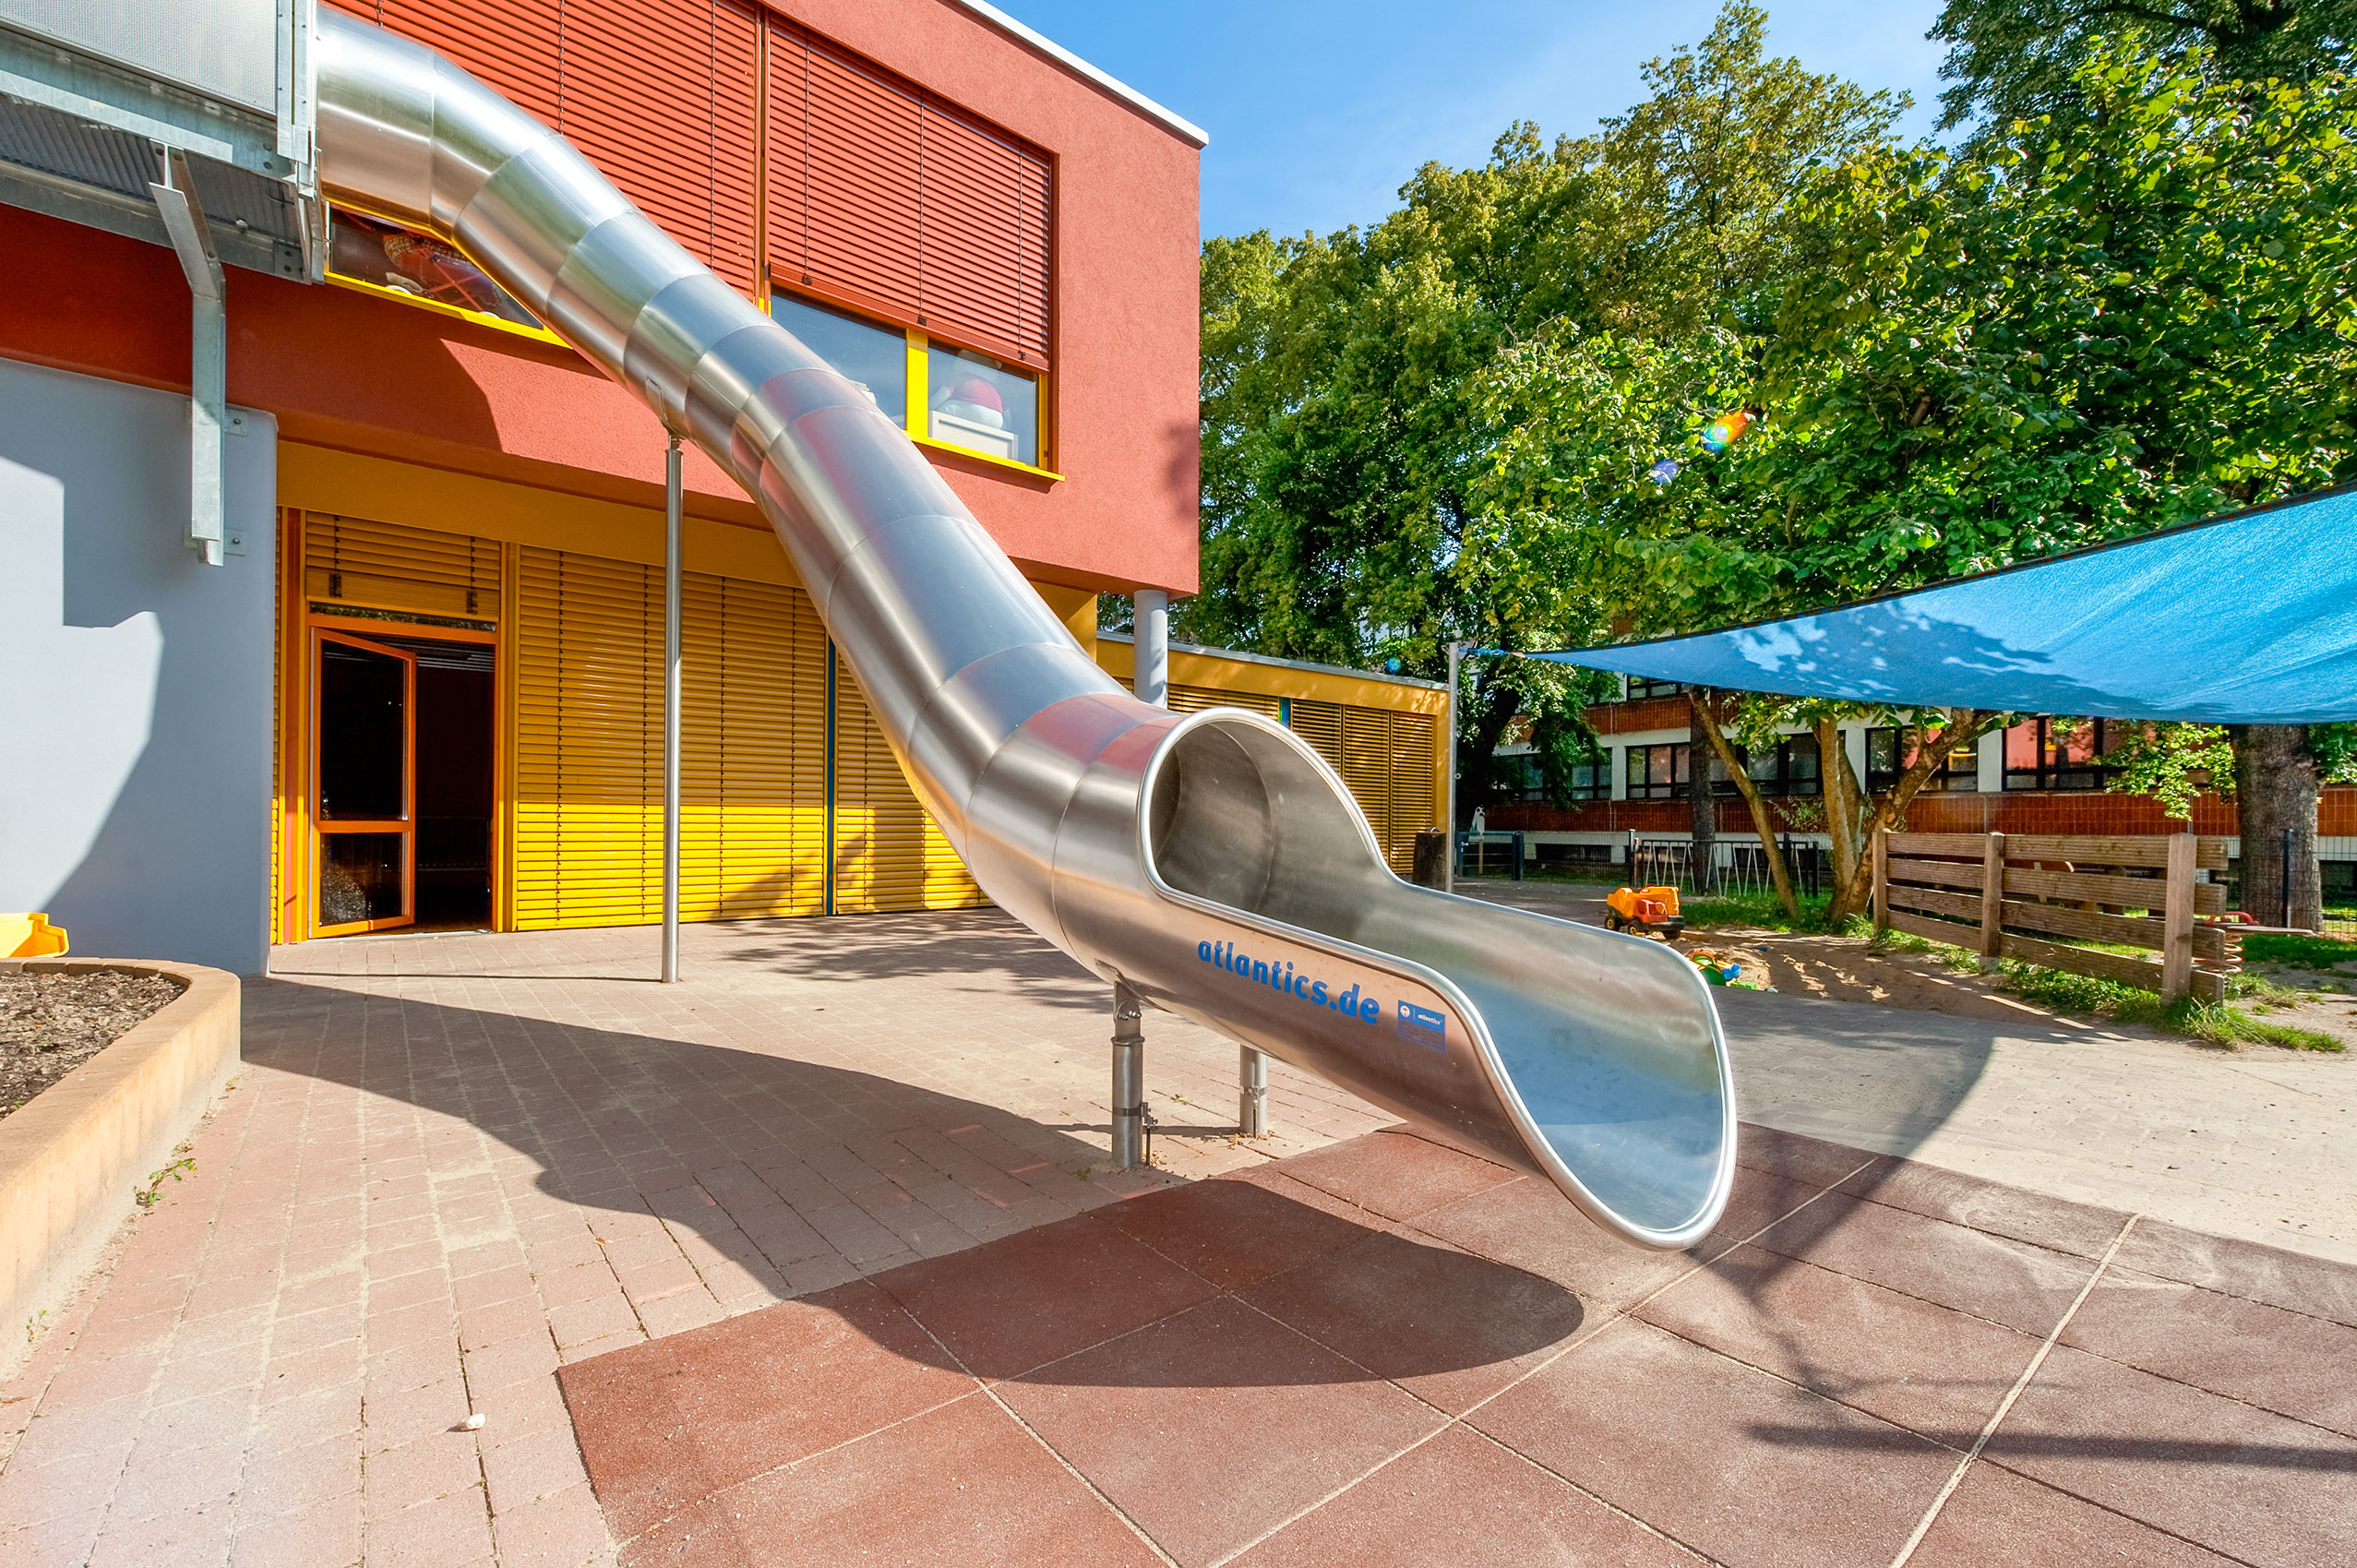 atlantics stainless steel slides daycare centre niethevillage escape slide tubes 096749